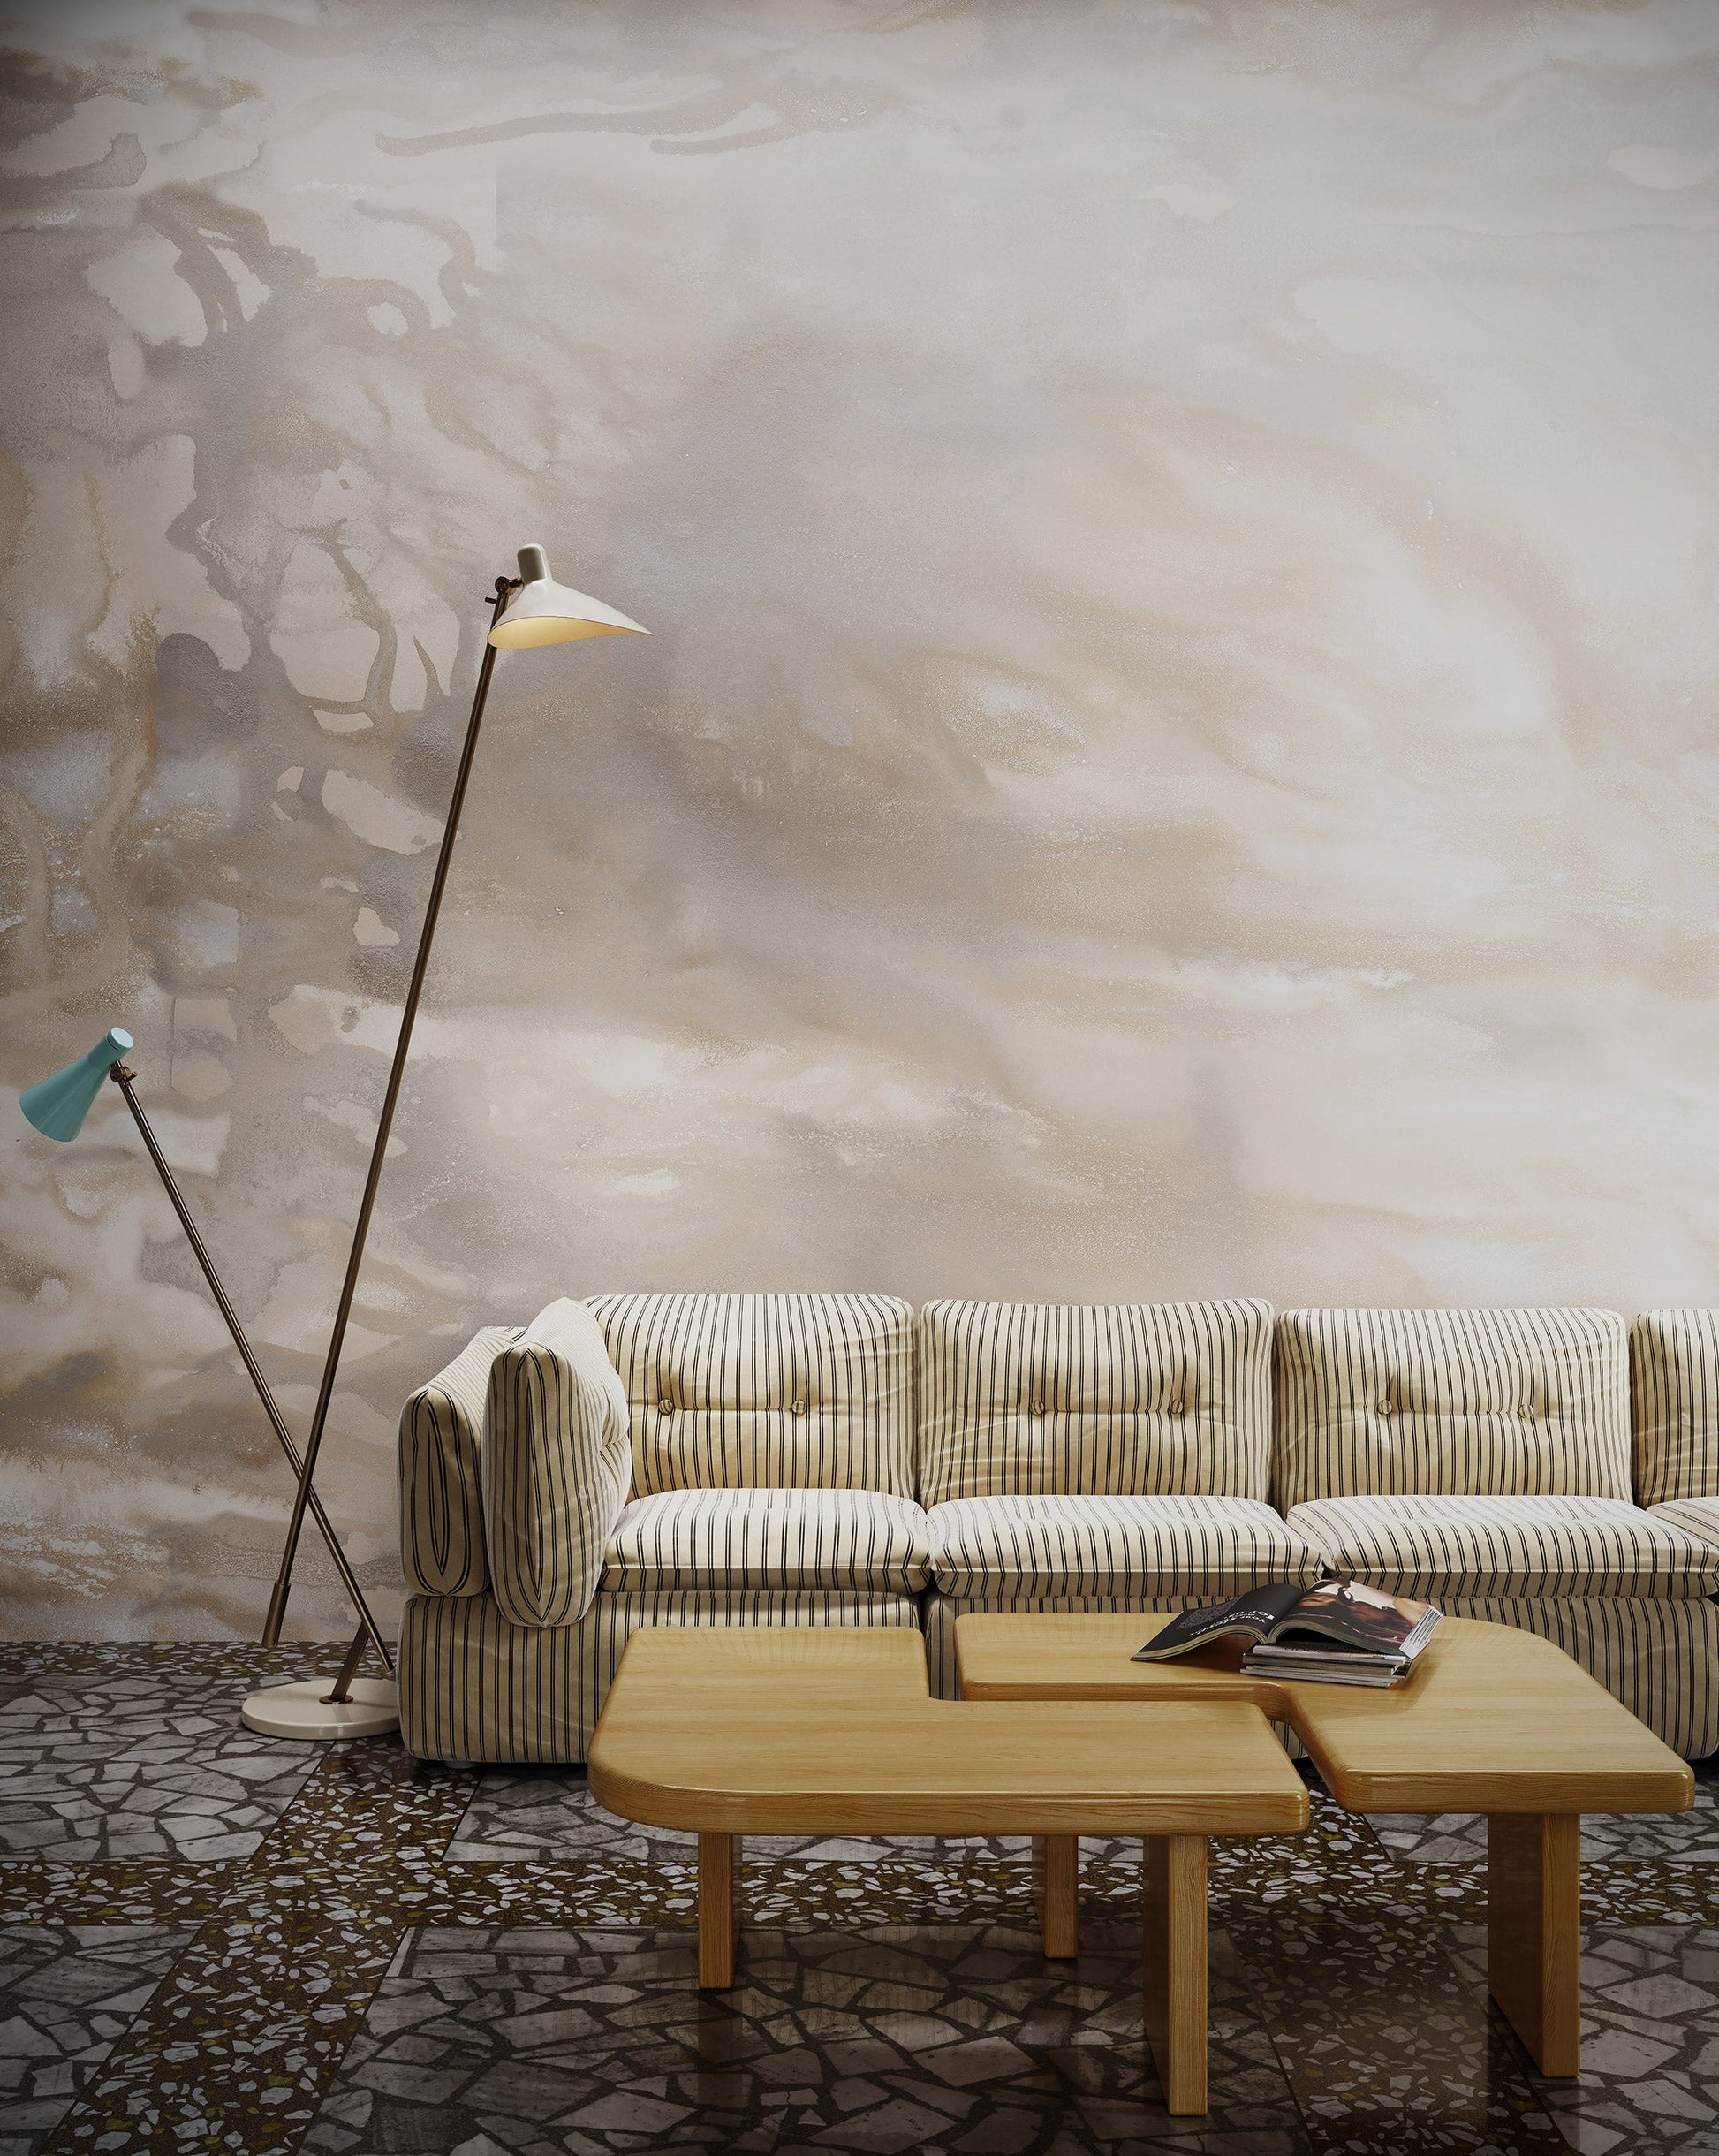 Eskayel's Delta Camel Mural wallpaper in a beige hued pattern installed in a living room.